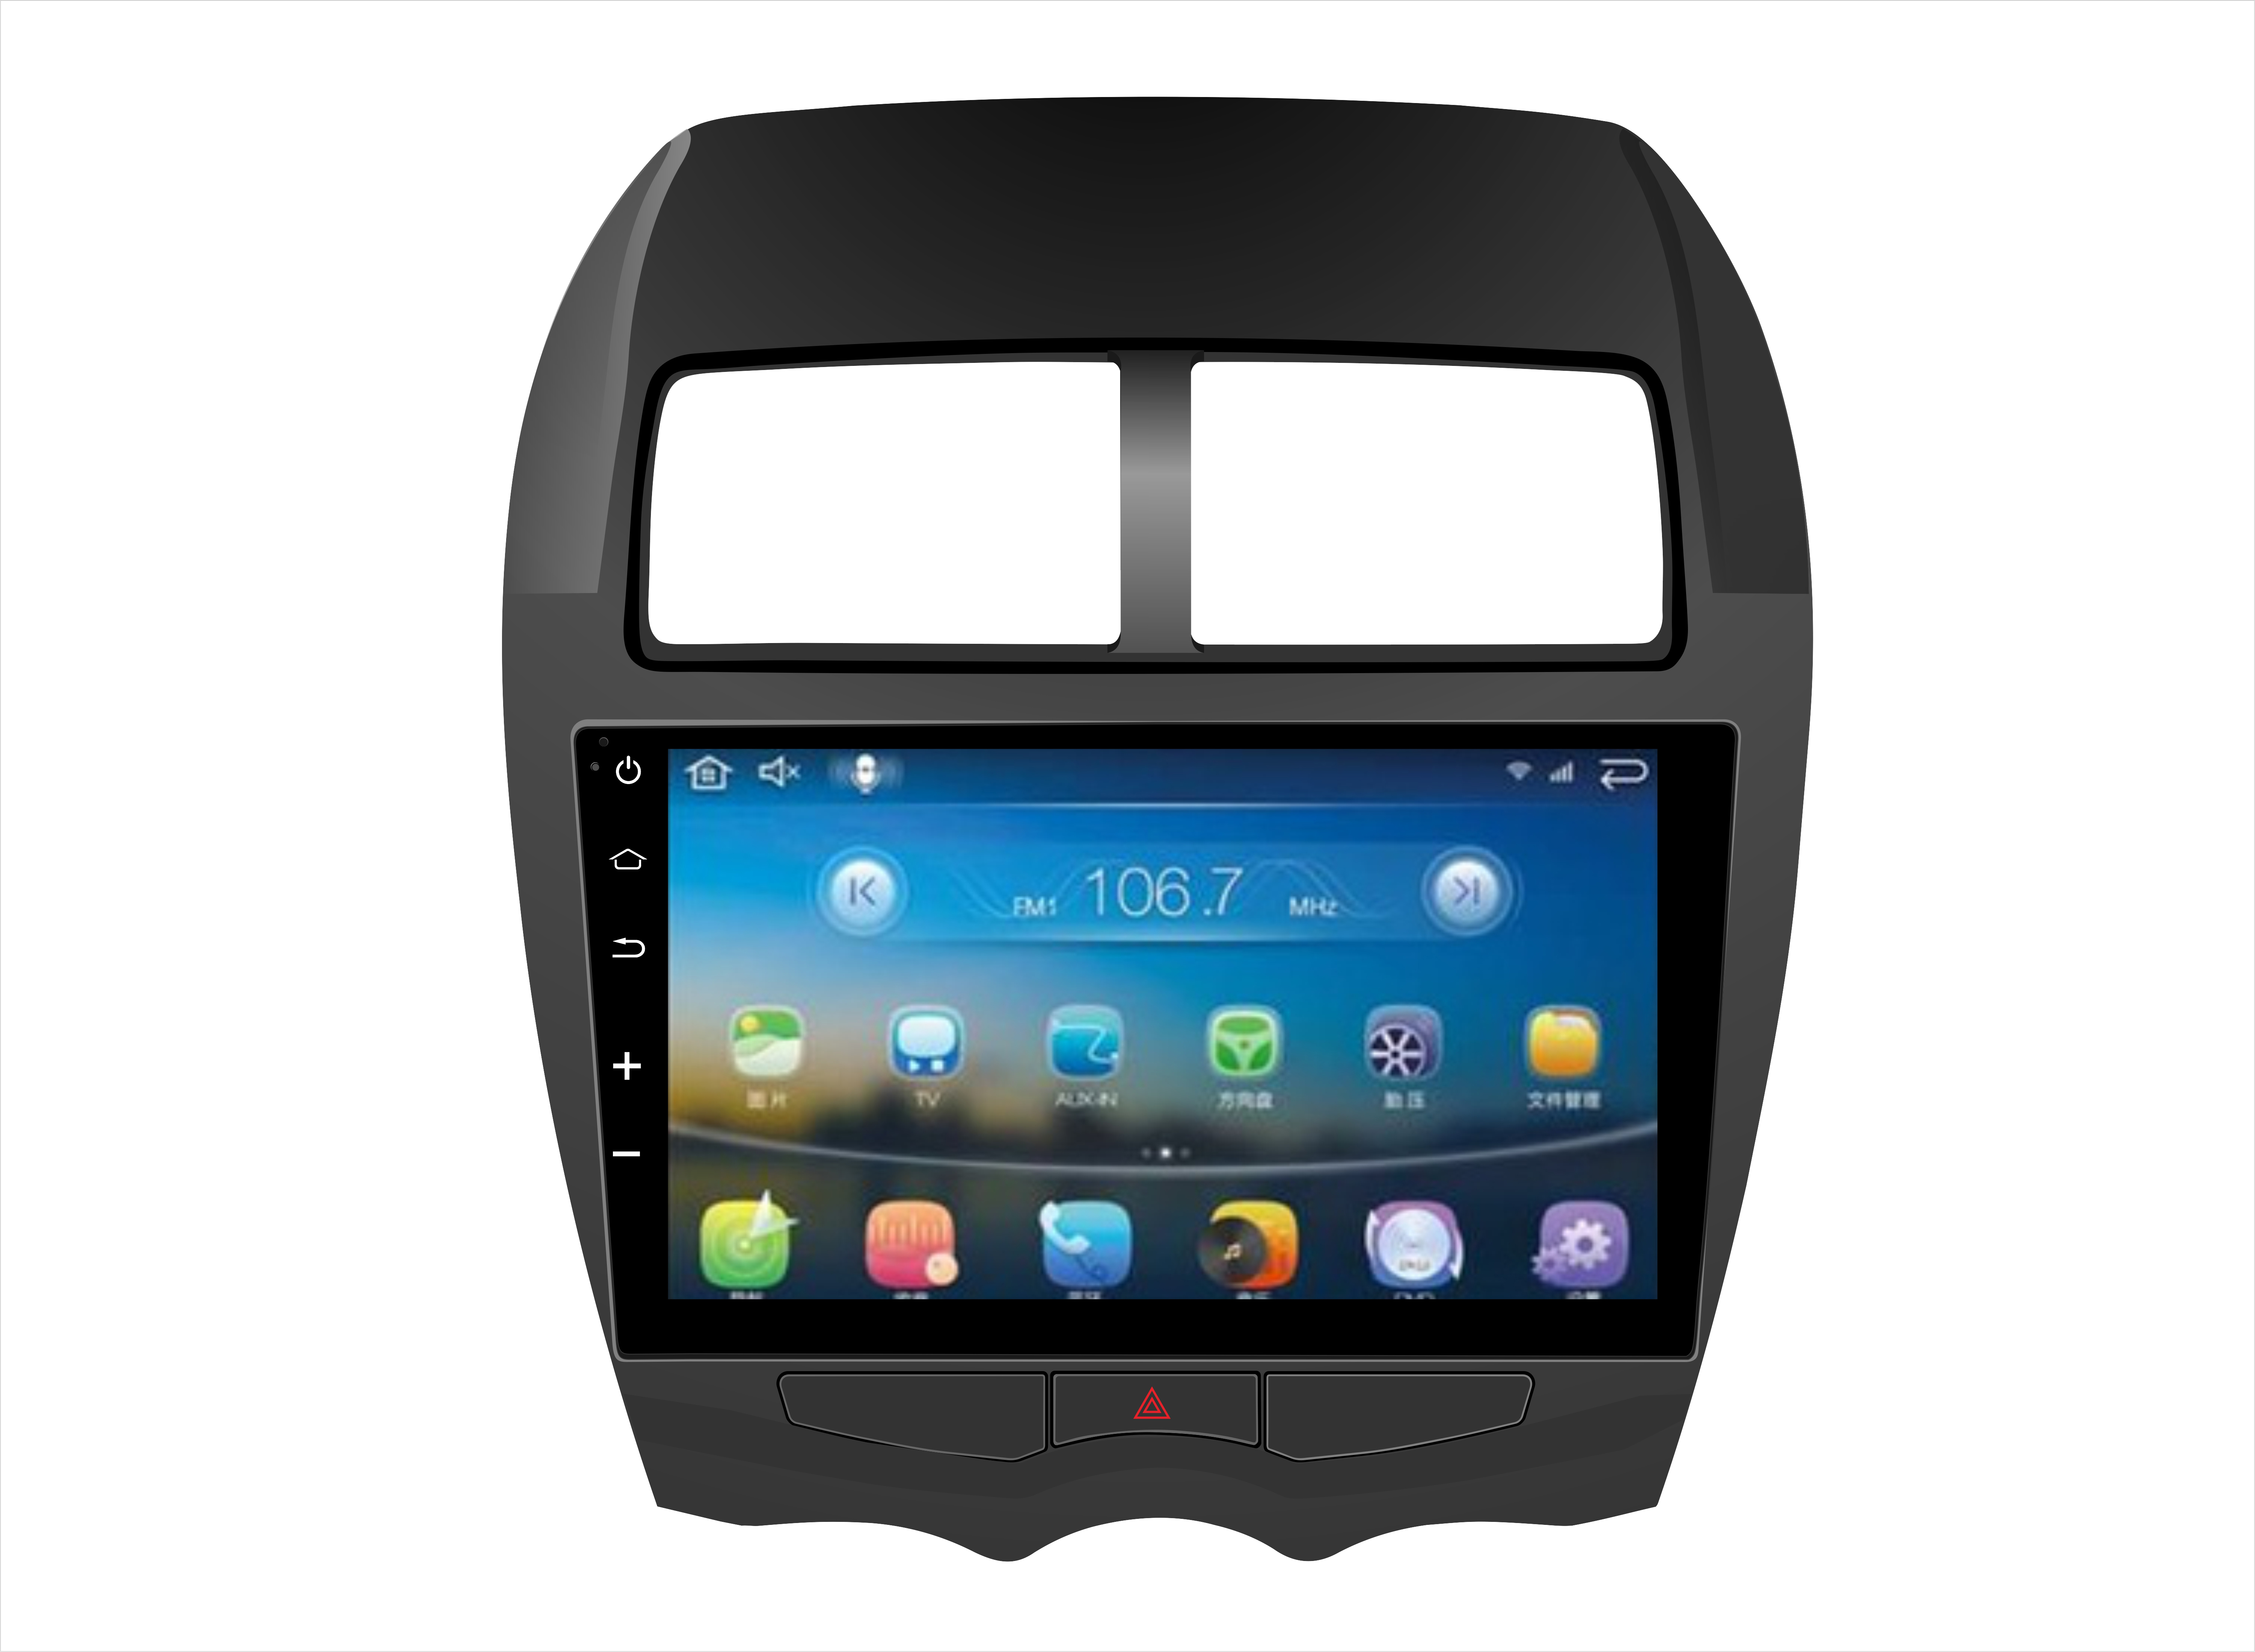 MITSUBISHI ASX 2007 10.1'' Capacitive Touch Screen Car Pad Android 6.0/7.1 car radio Auto GPS navi Bluetooth Wifi Mirror link Eight/Quad Cores 2G 32G